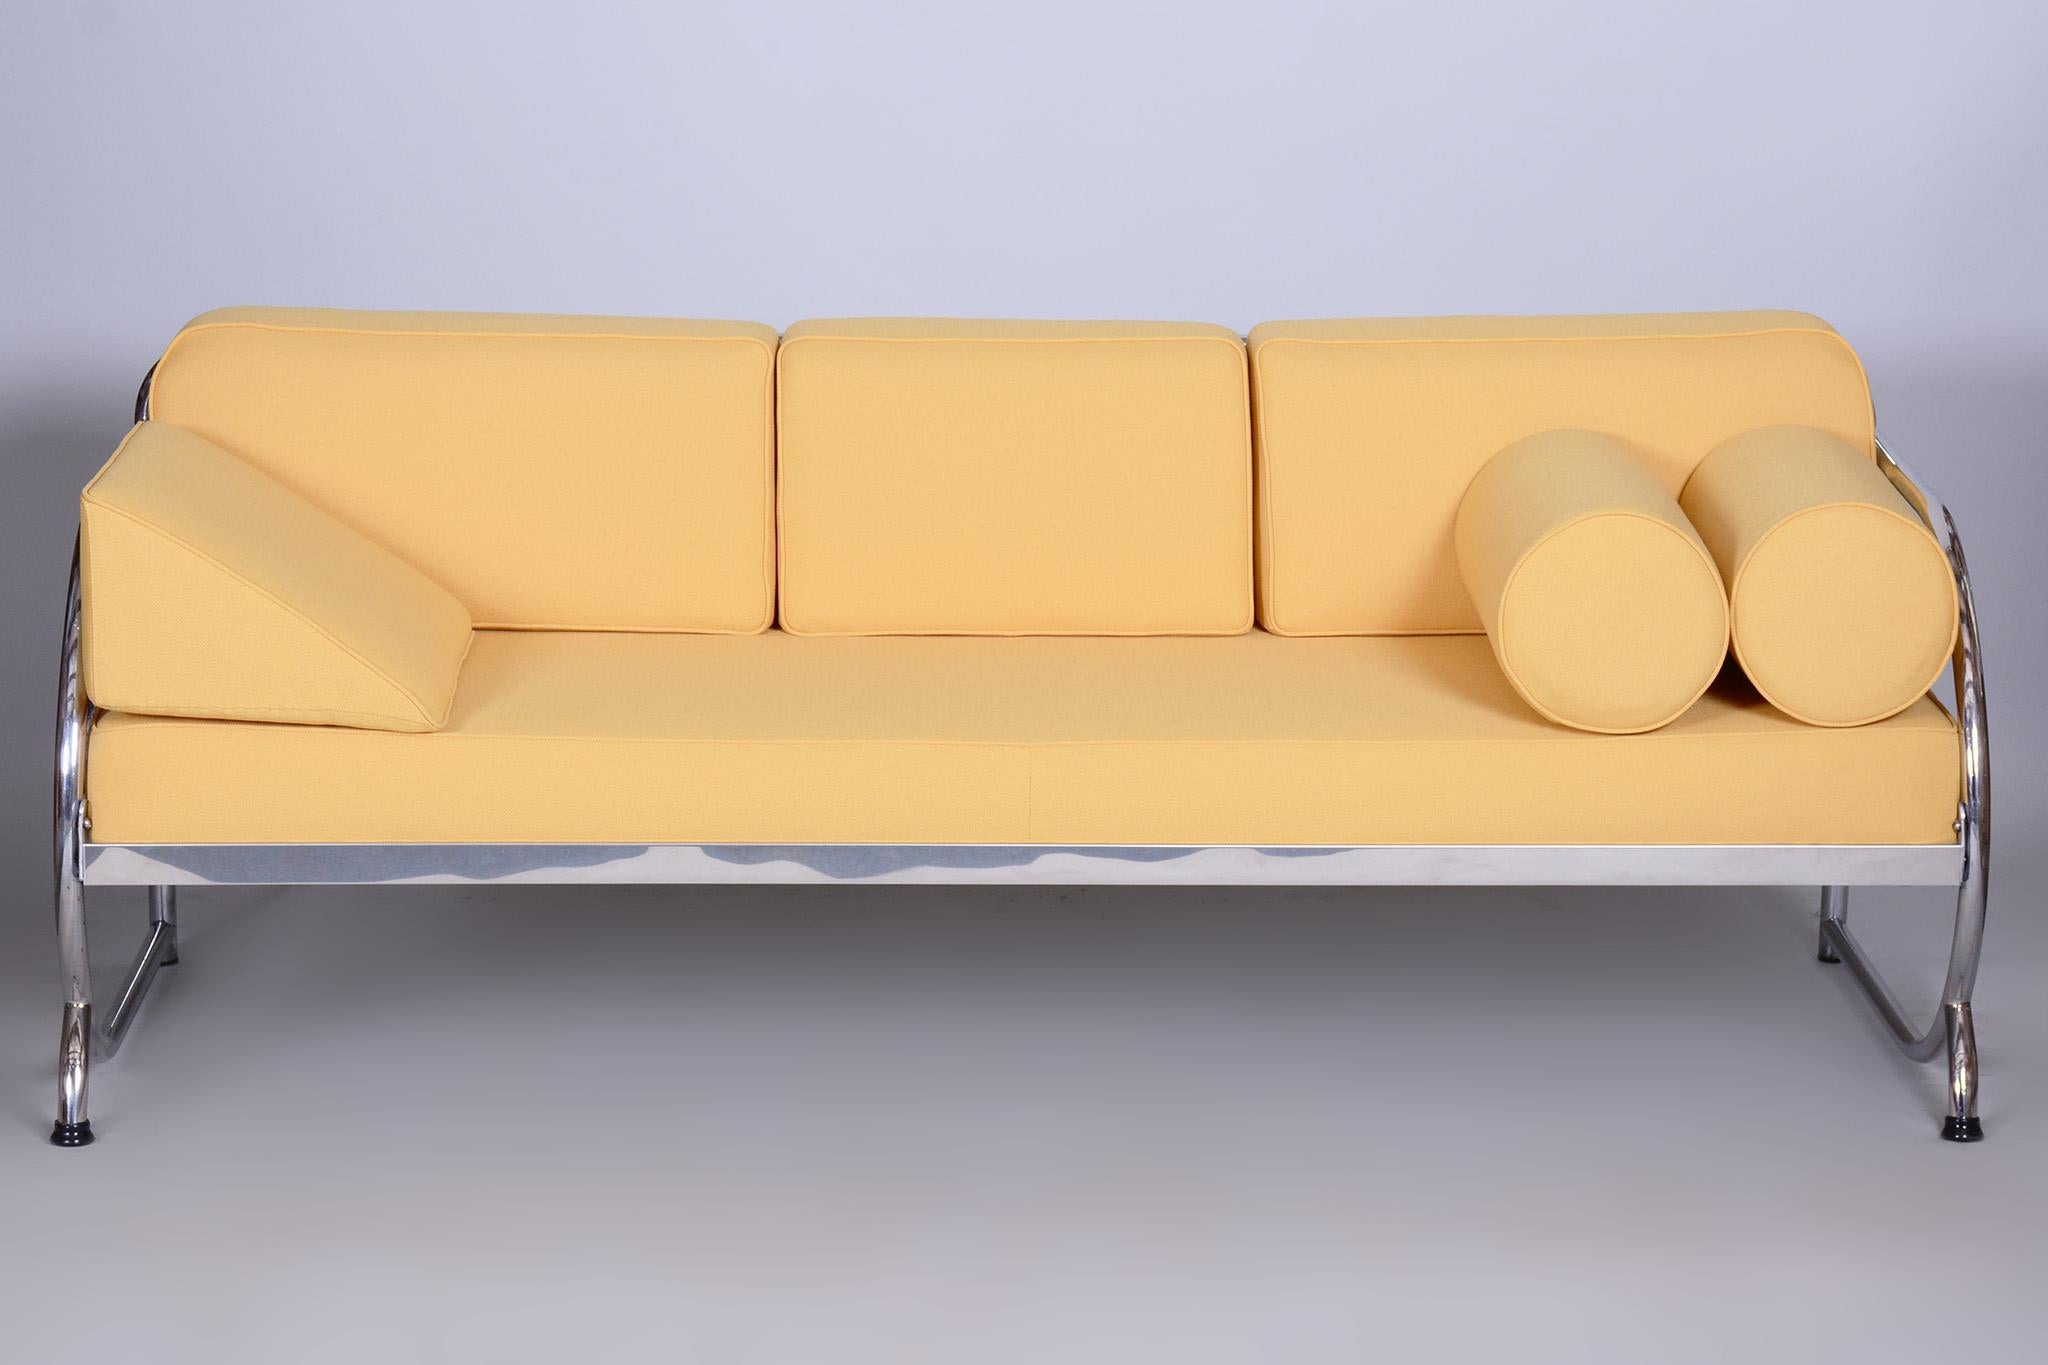 Fully Restored Bauhaus Yellow Leather Tubular Chrome Sofa, Robert Slezák, 1930s In Good Condition For Sale In Horomerice, CZ